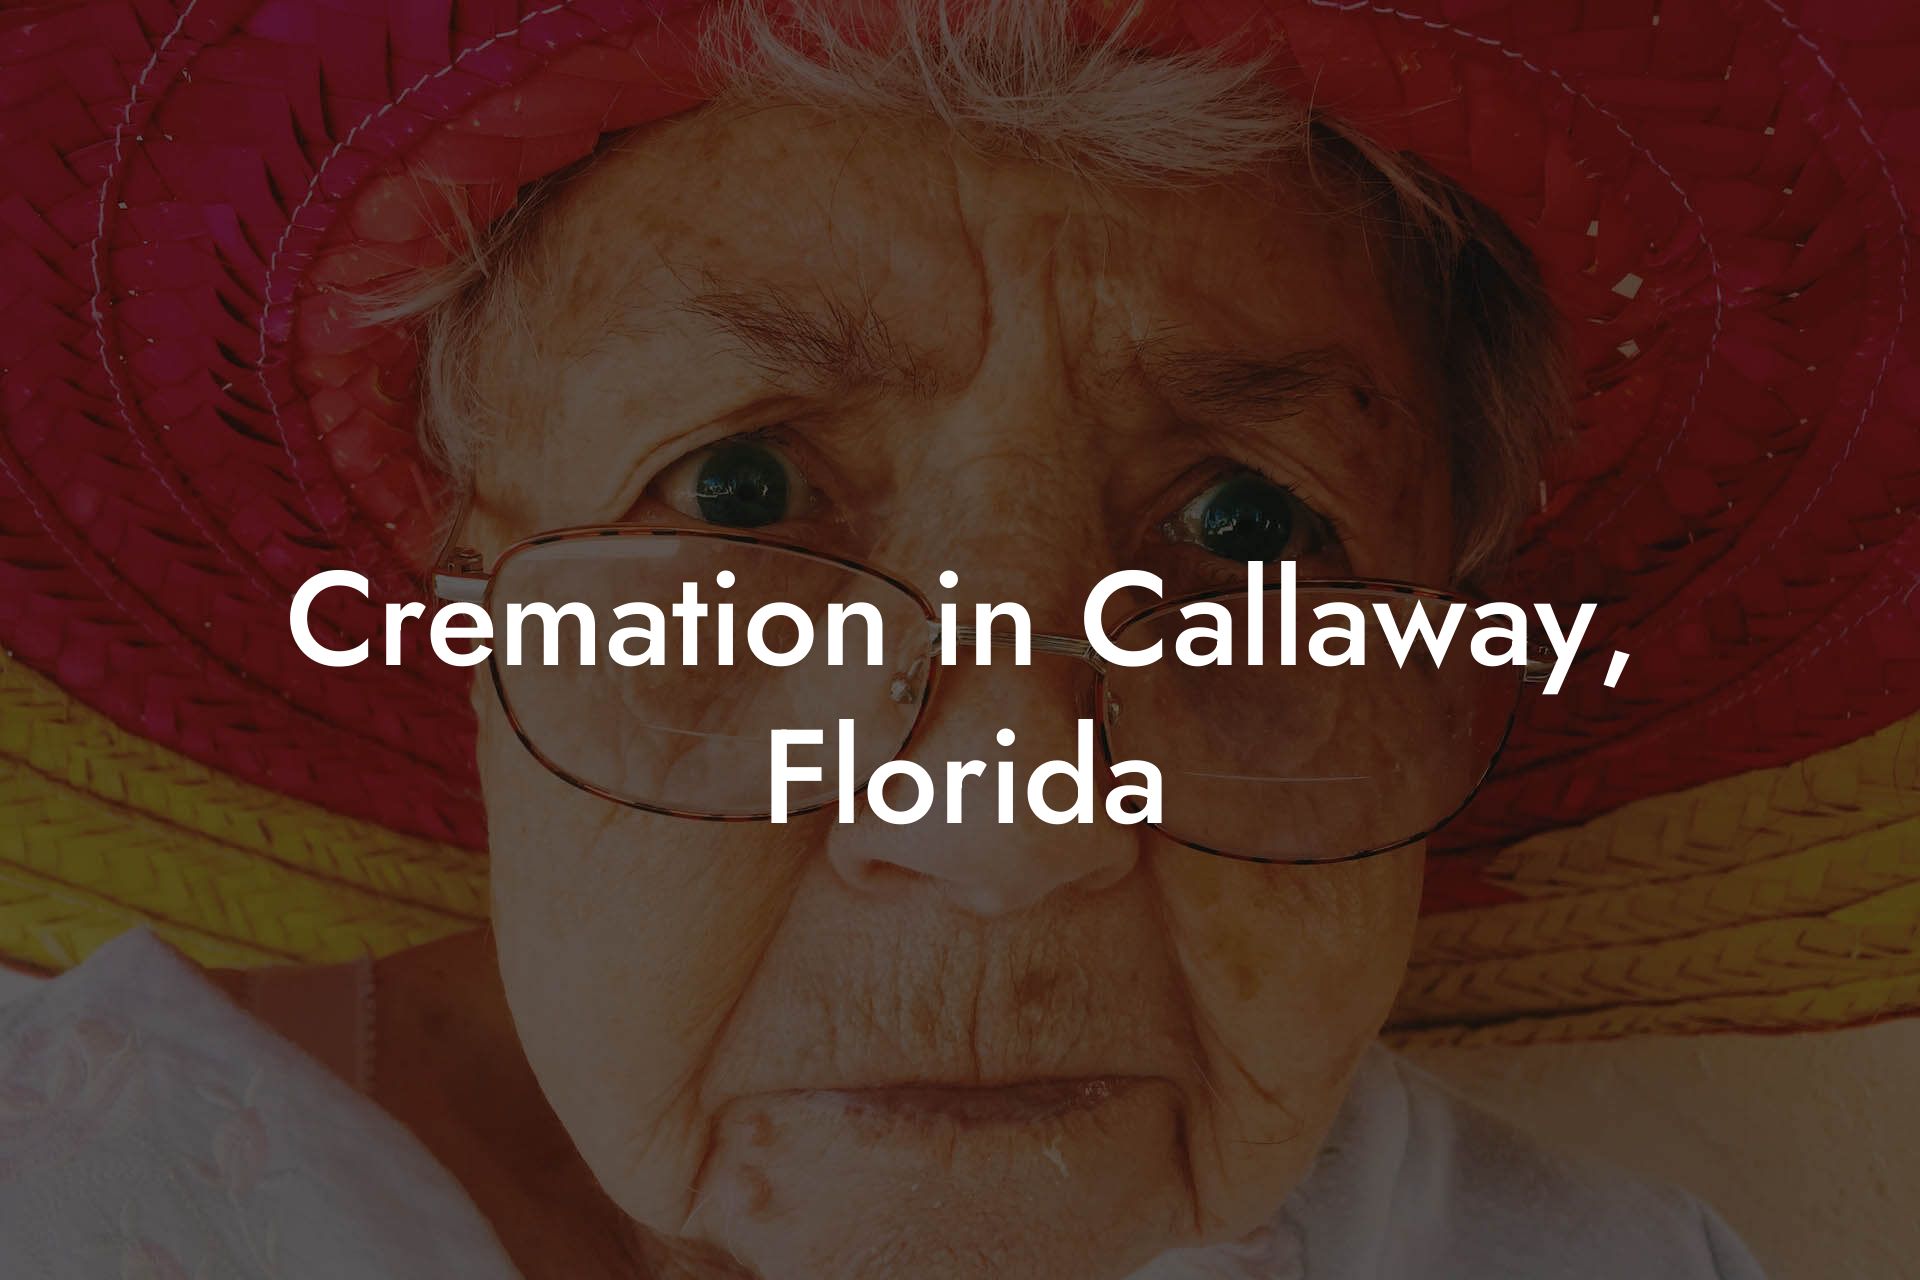 Cremation in Callaway, Florida